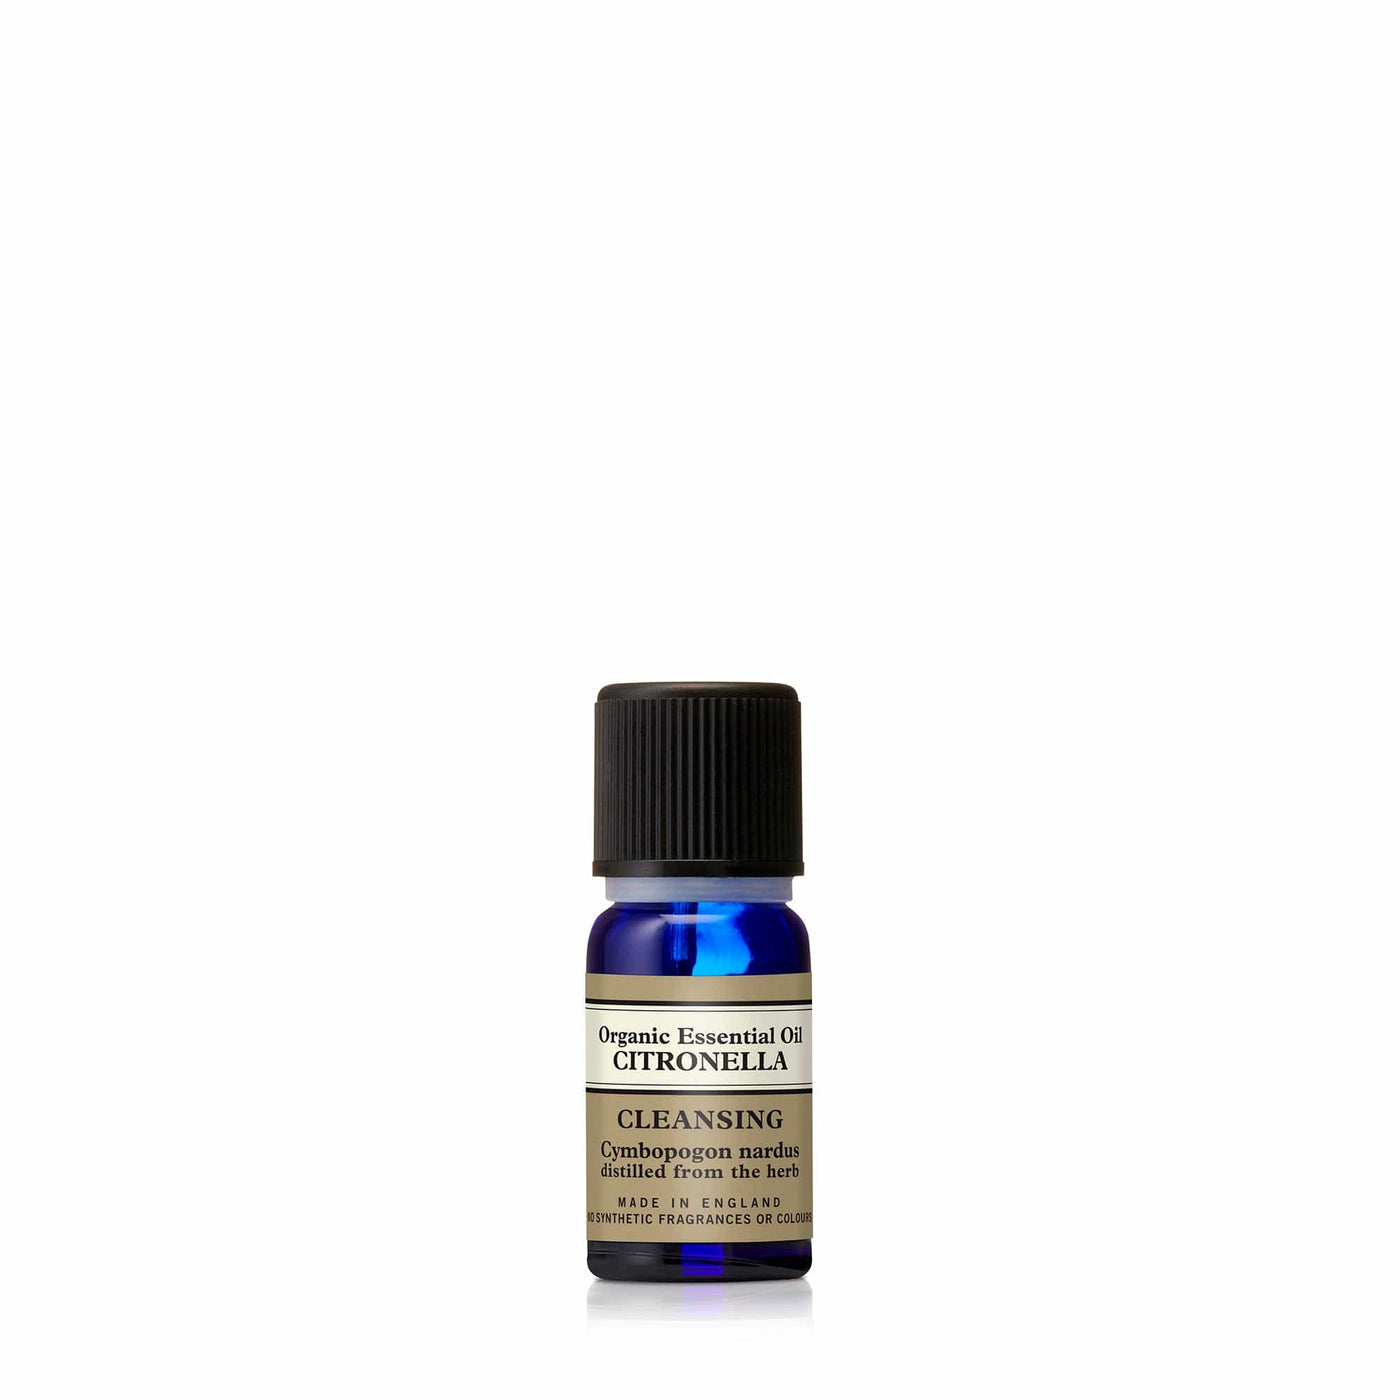 Neal's Yard Remedies Aromatherapy Citronella Organic Essential Oil 0.34 fl. oz